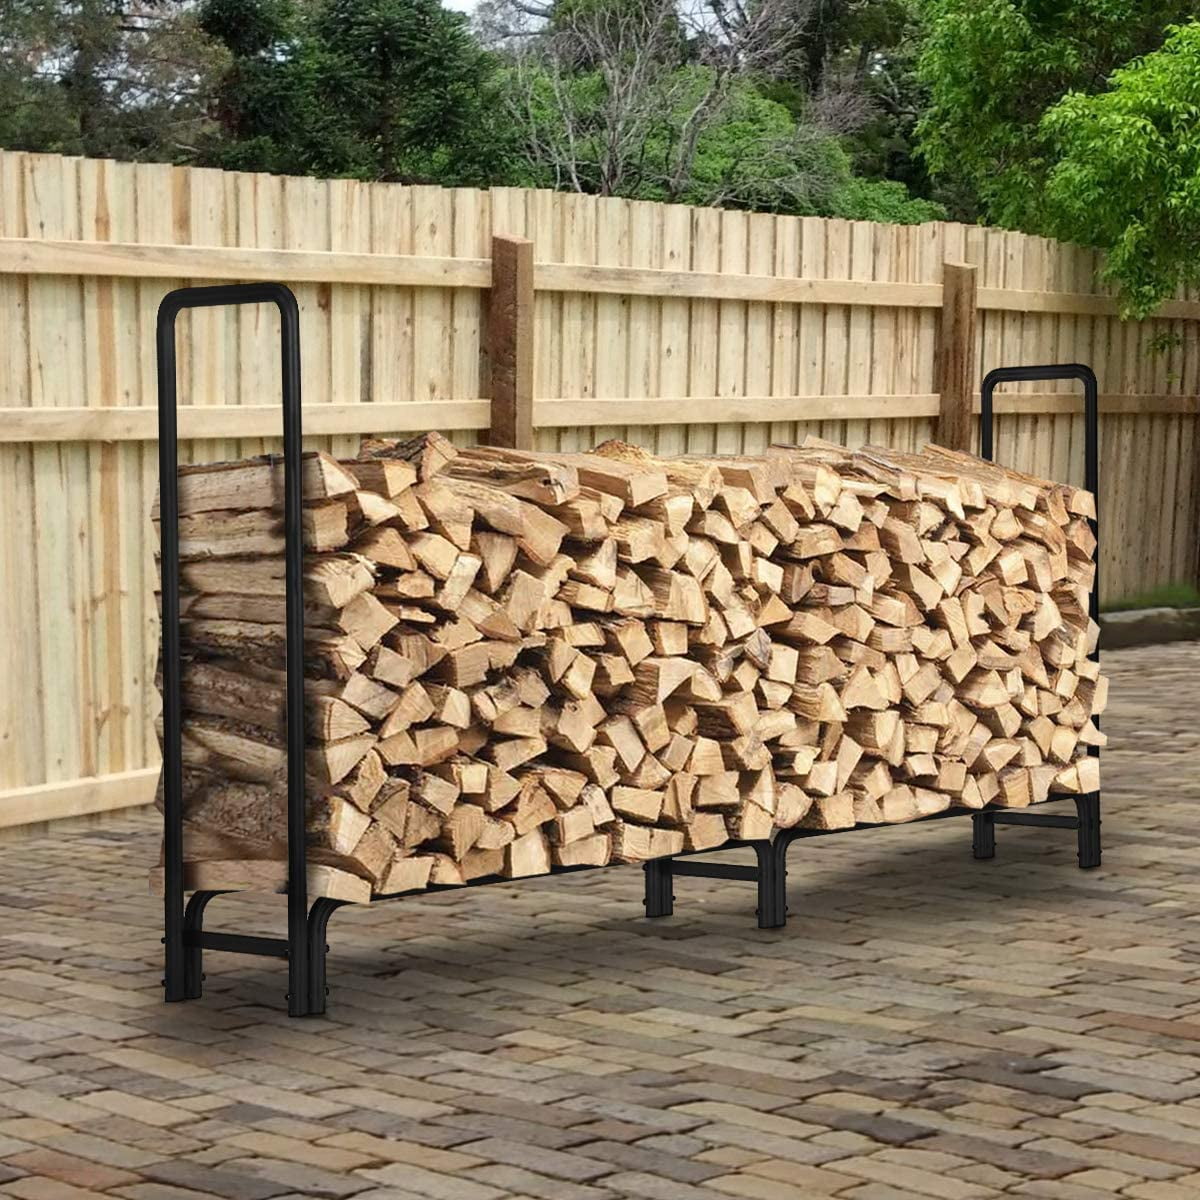 Large Log Store Metal Outdoor Wood Firewood Storage Rack Shelf Holder Stand NEW 